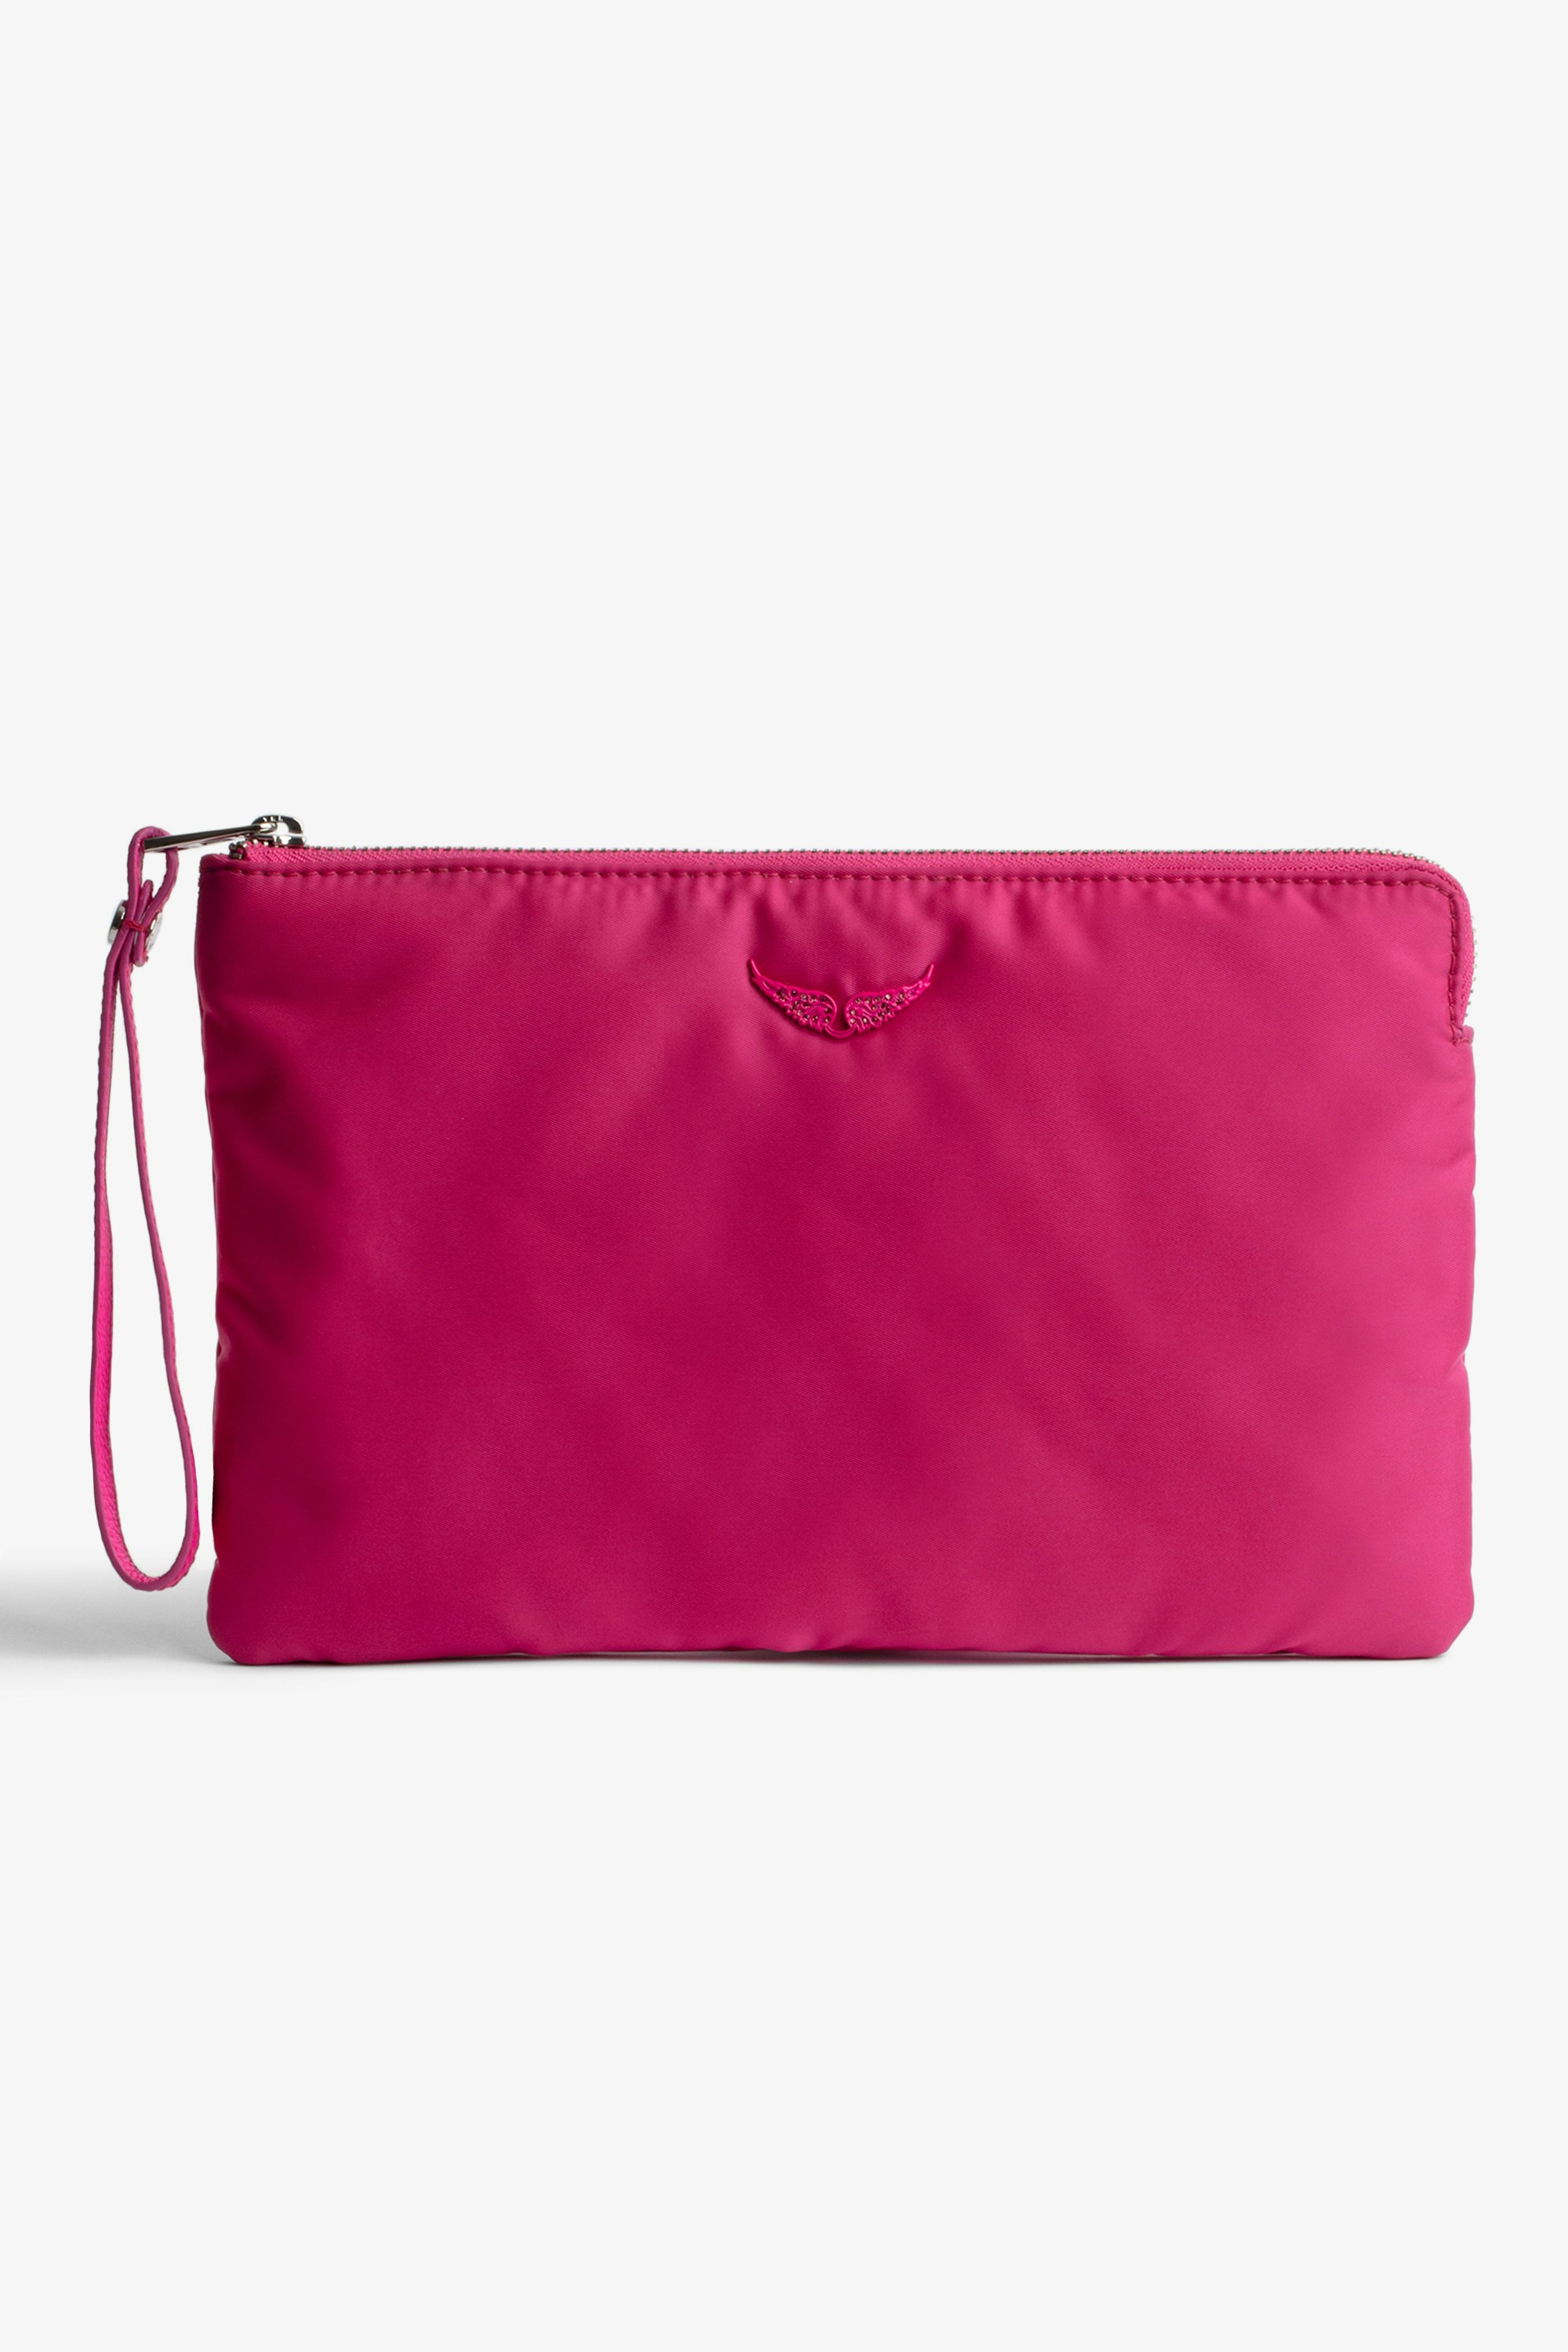 Uma クラッチバッグ Women's zipped clutch in pink nylon